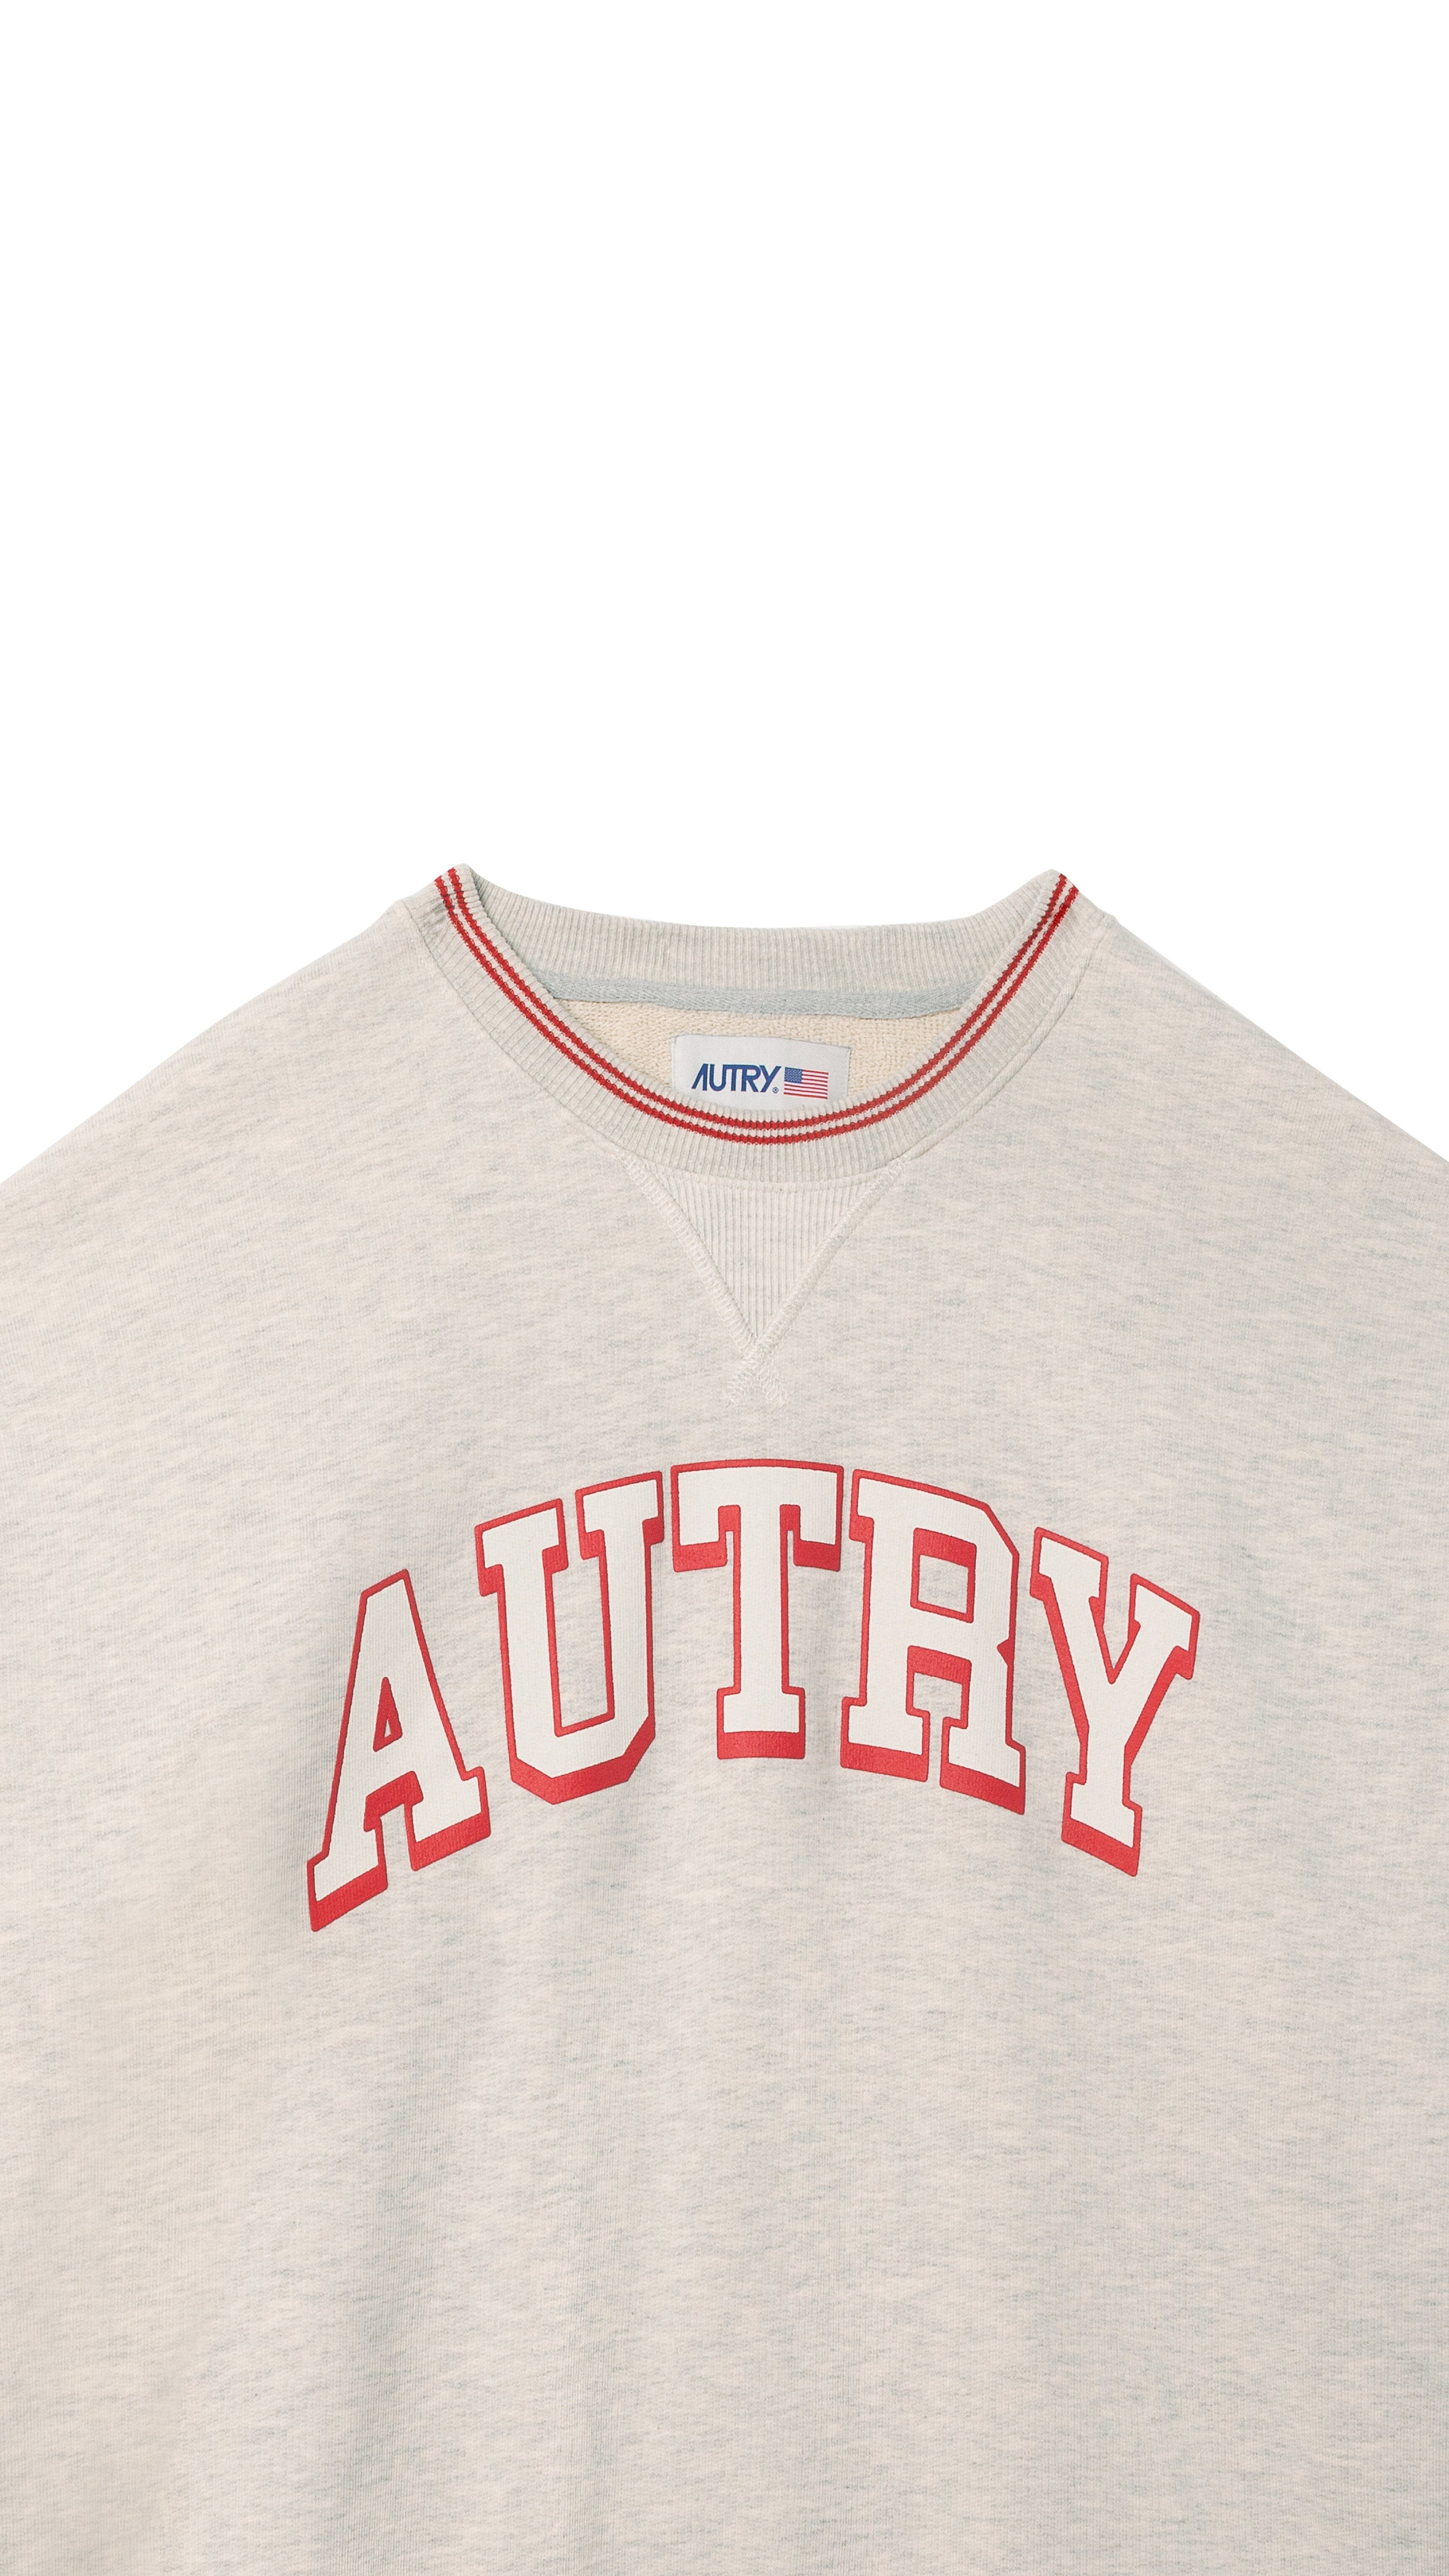 AUTRY - SWPW 524M - Autry Sweatshirt - Grigio Melange/ Rosso Scarpe Donna AUTRY - Collezione donna 